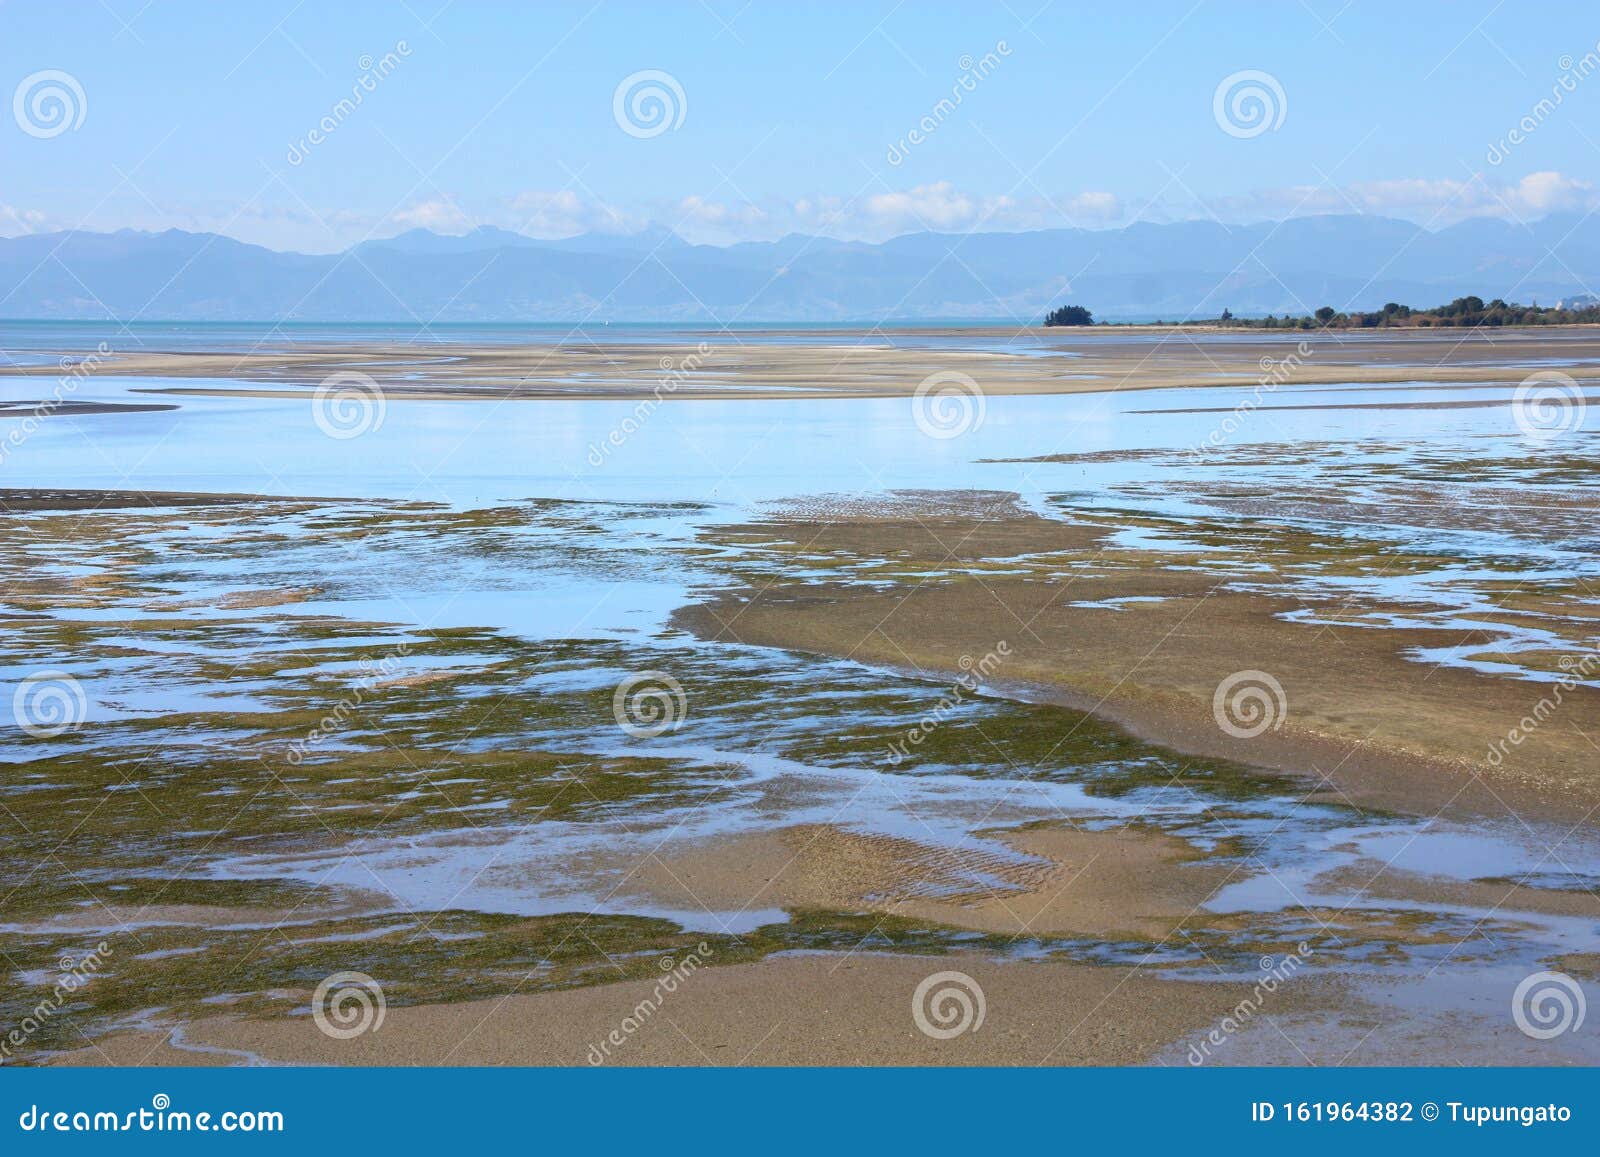 tidal mudflats landscape